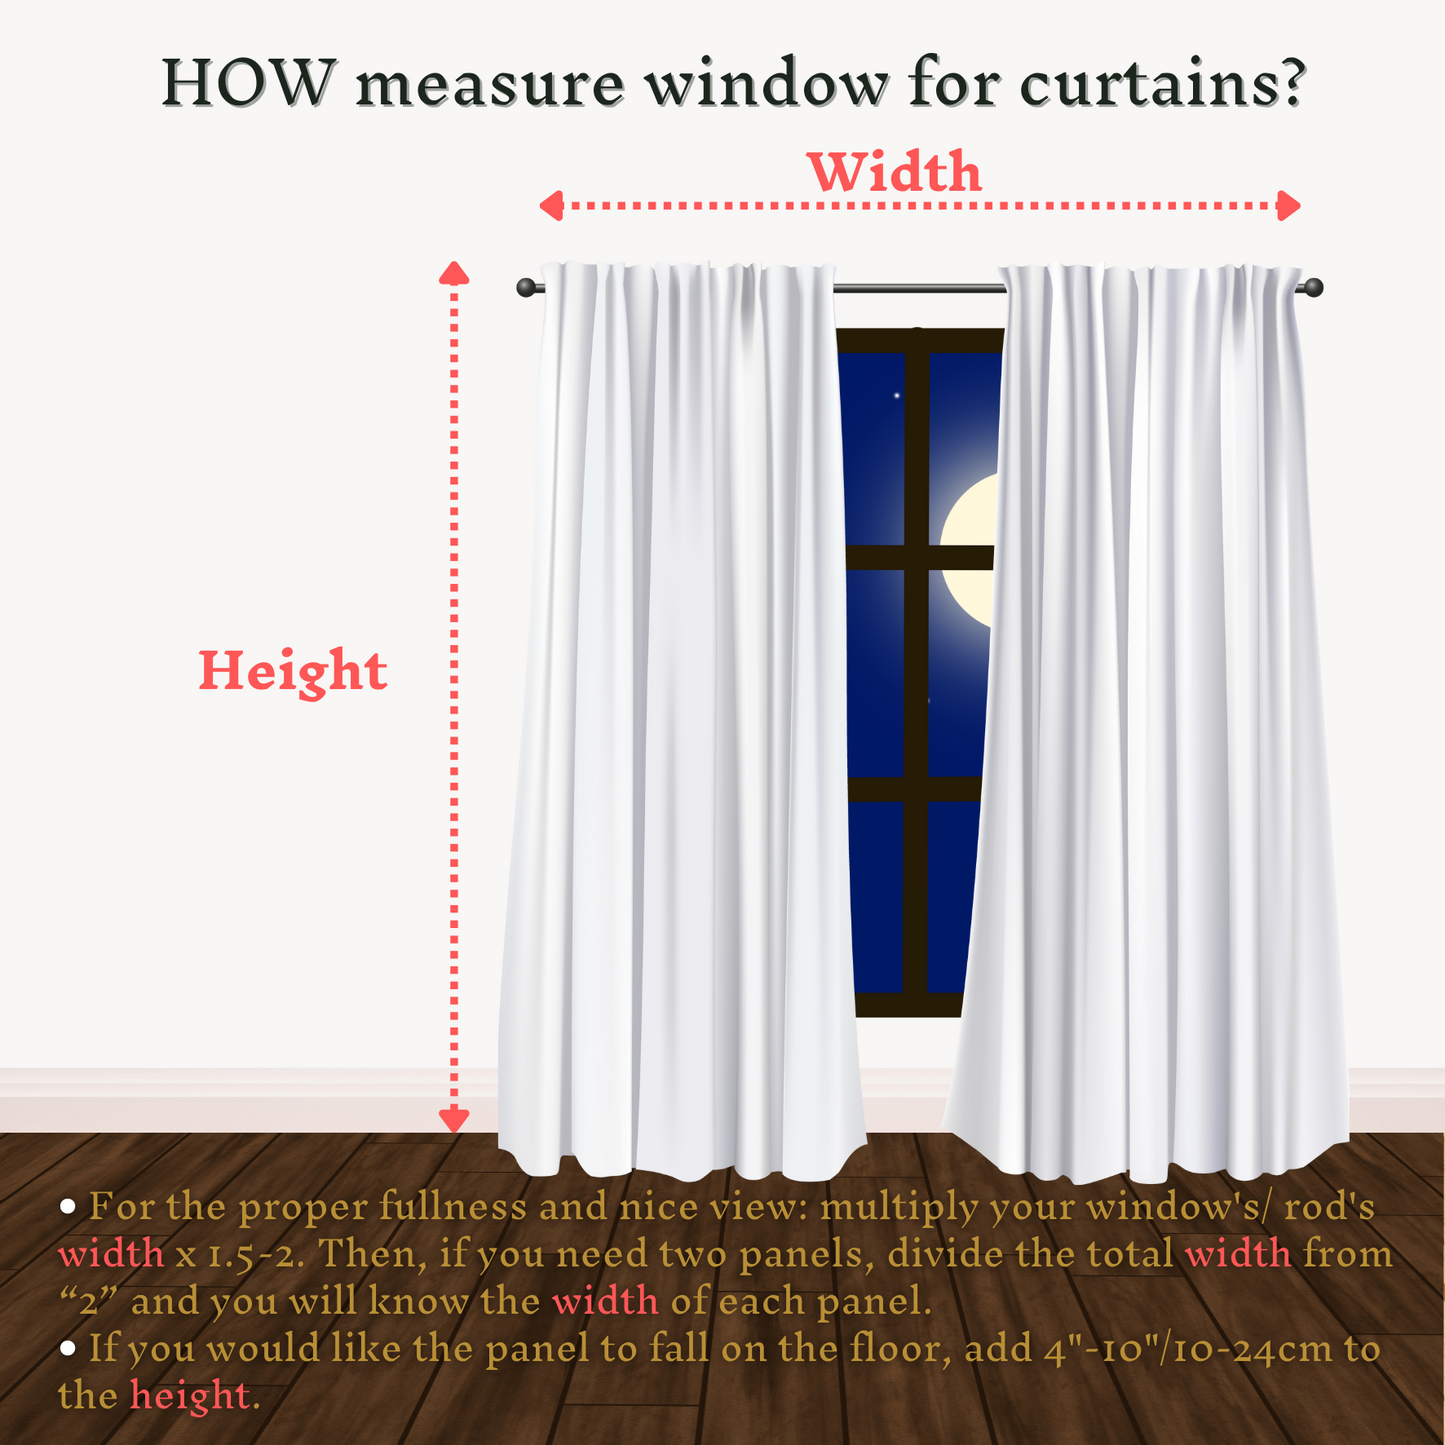 Set of 2 linen curtains (Density: 175 g/m2) in Natural Light color